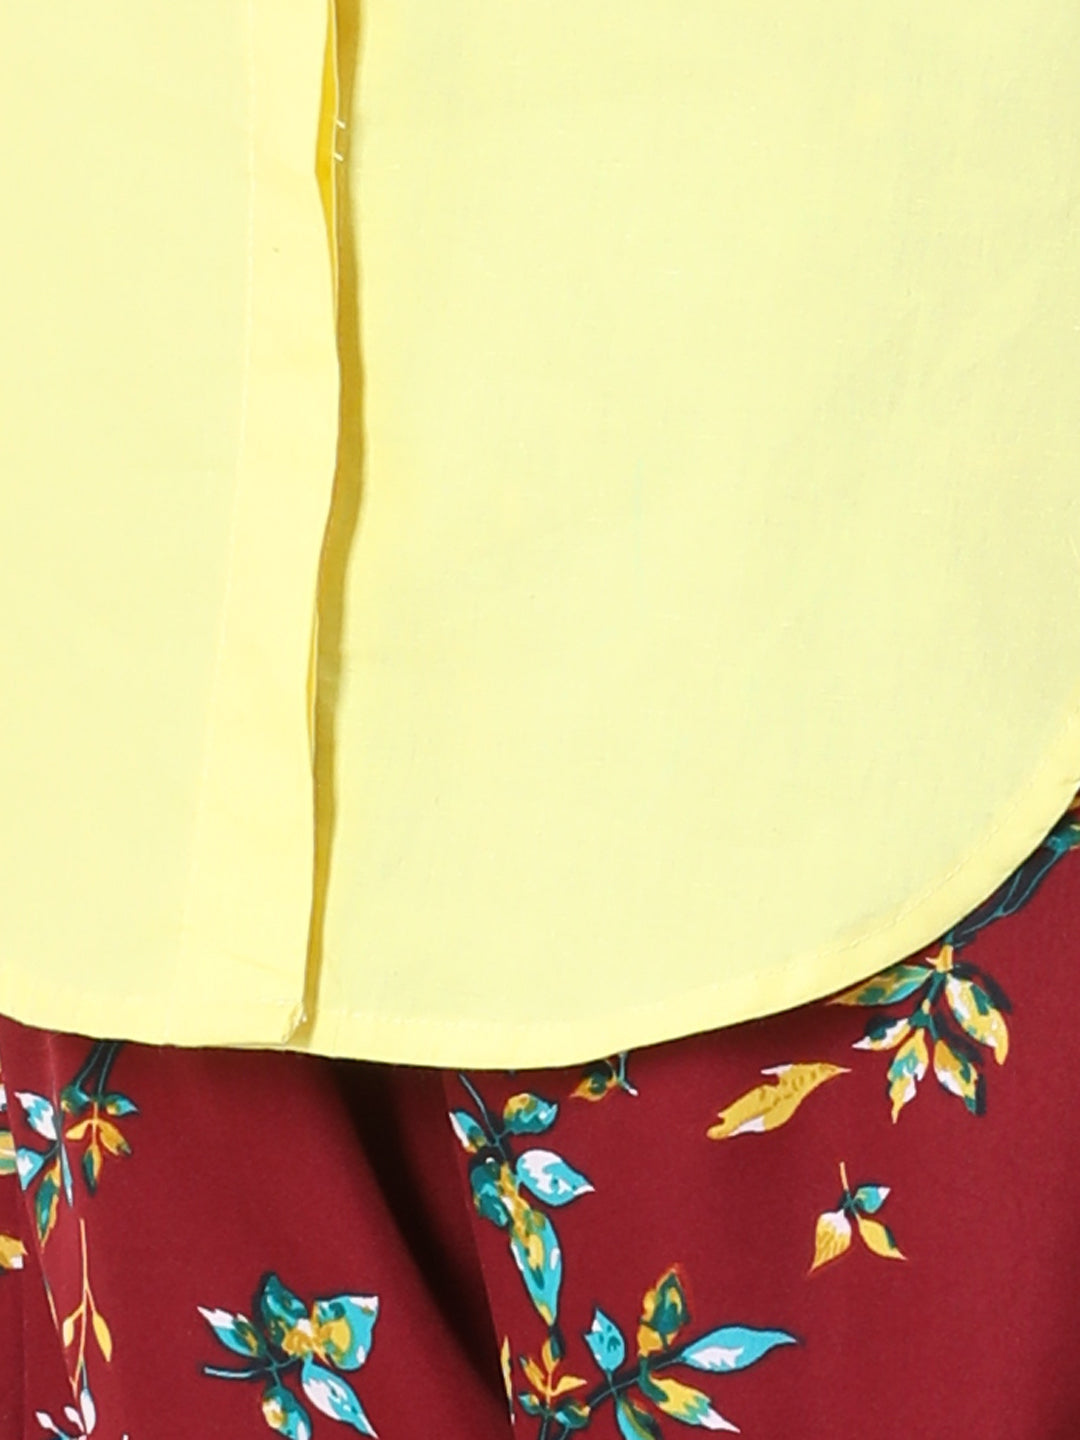 Cutiekins Girls Shirt Style Solid Top With Printed Palazzo -Lemon & Maroon